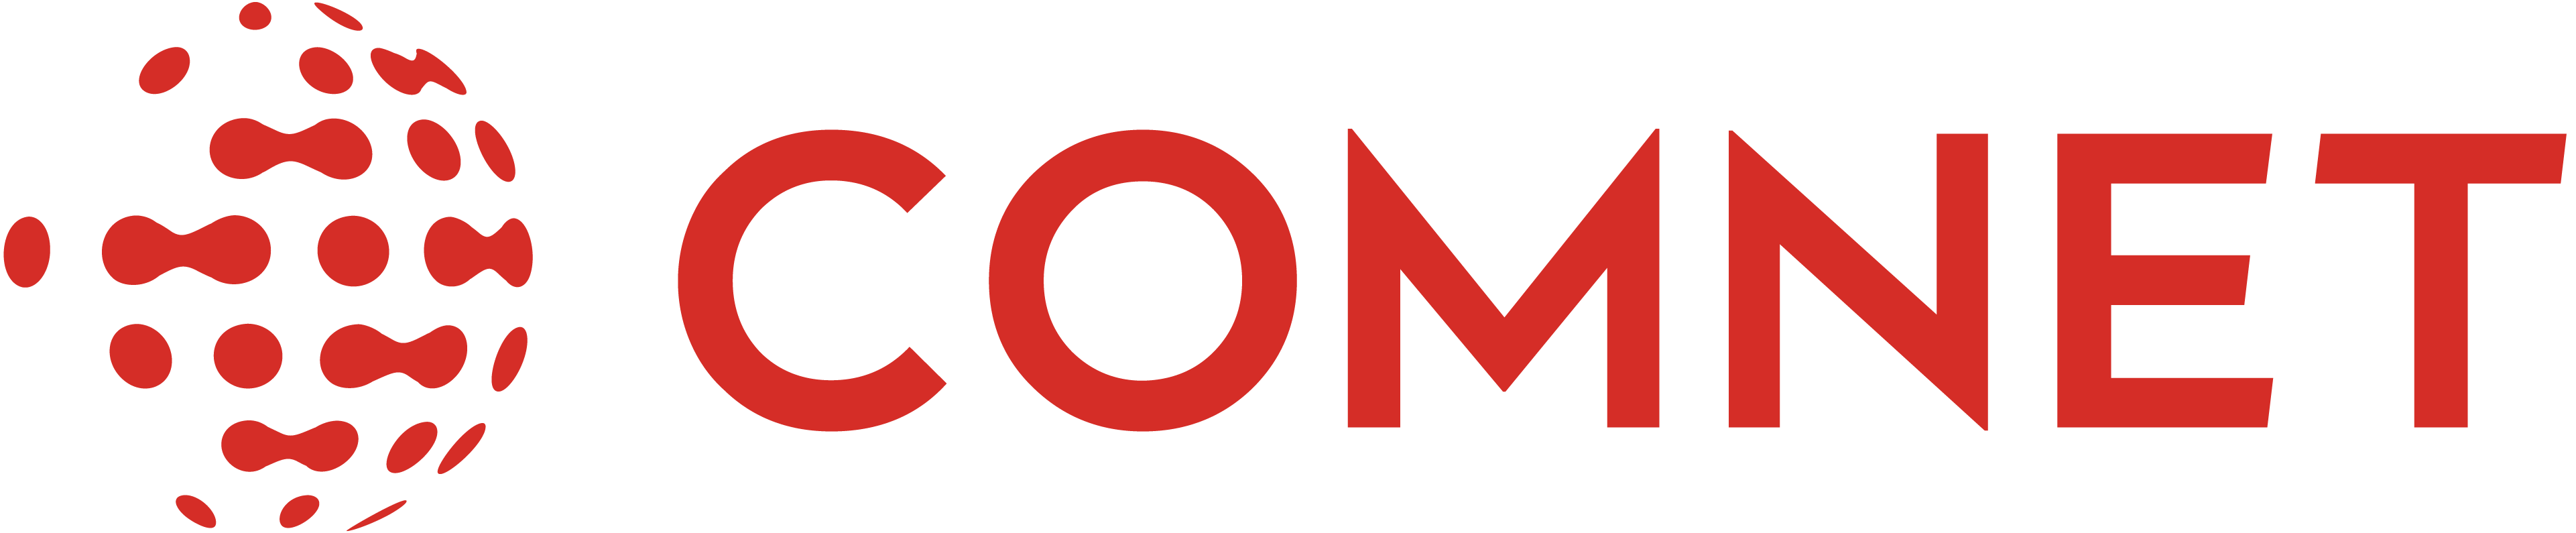 Comnet Systems Pte Ltd logo